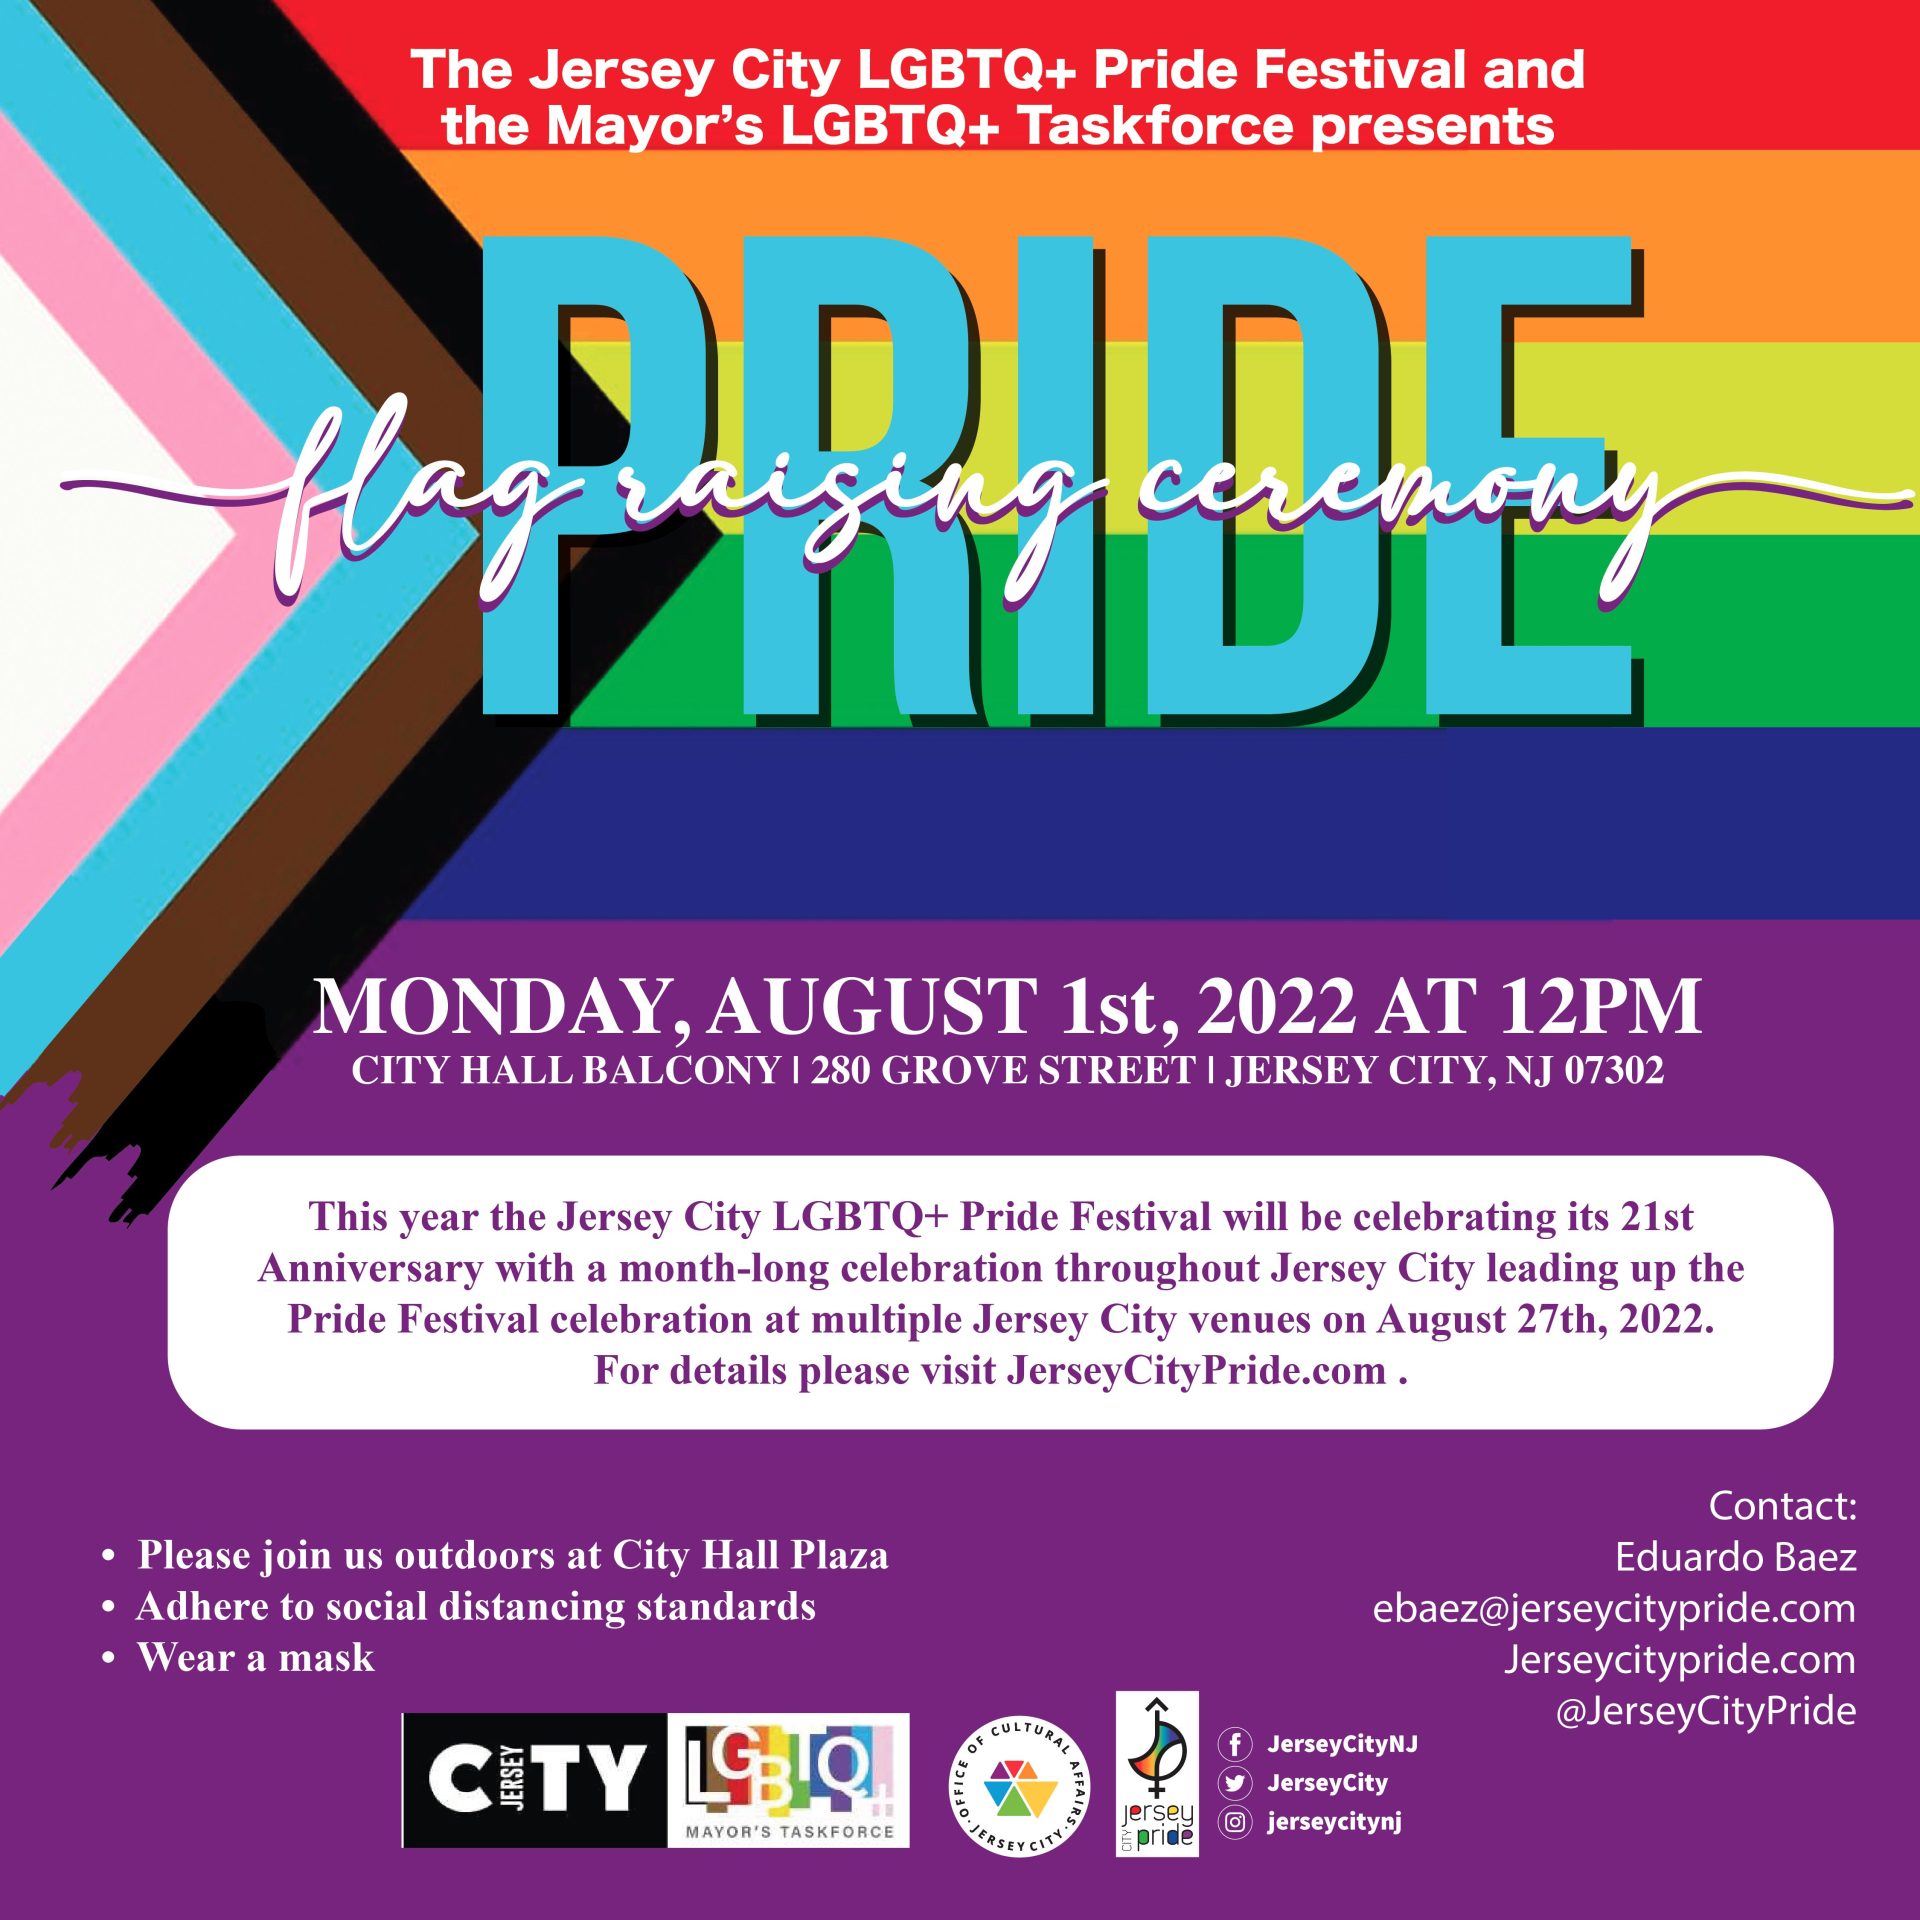 Jersey City Pride Flag Raising Jersey City LGBTQ+ Pride Festival